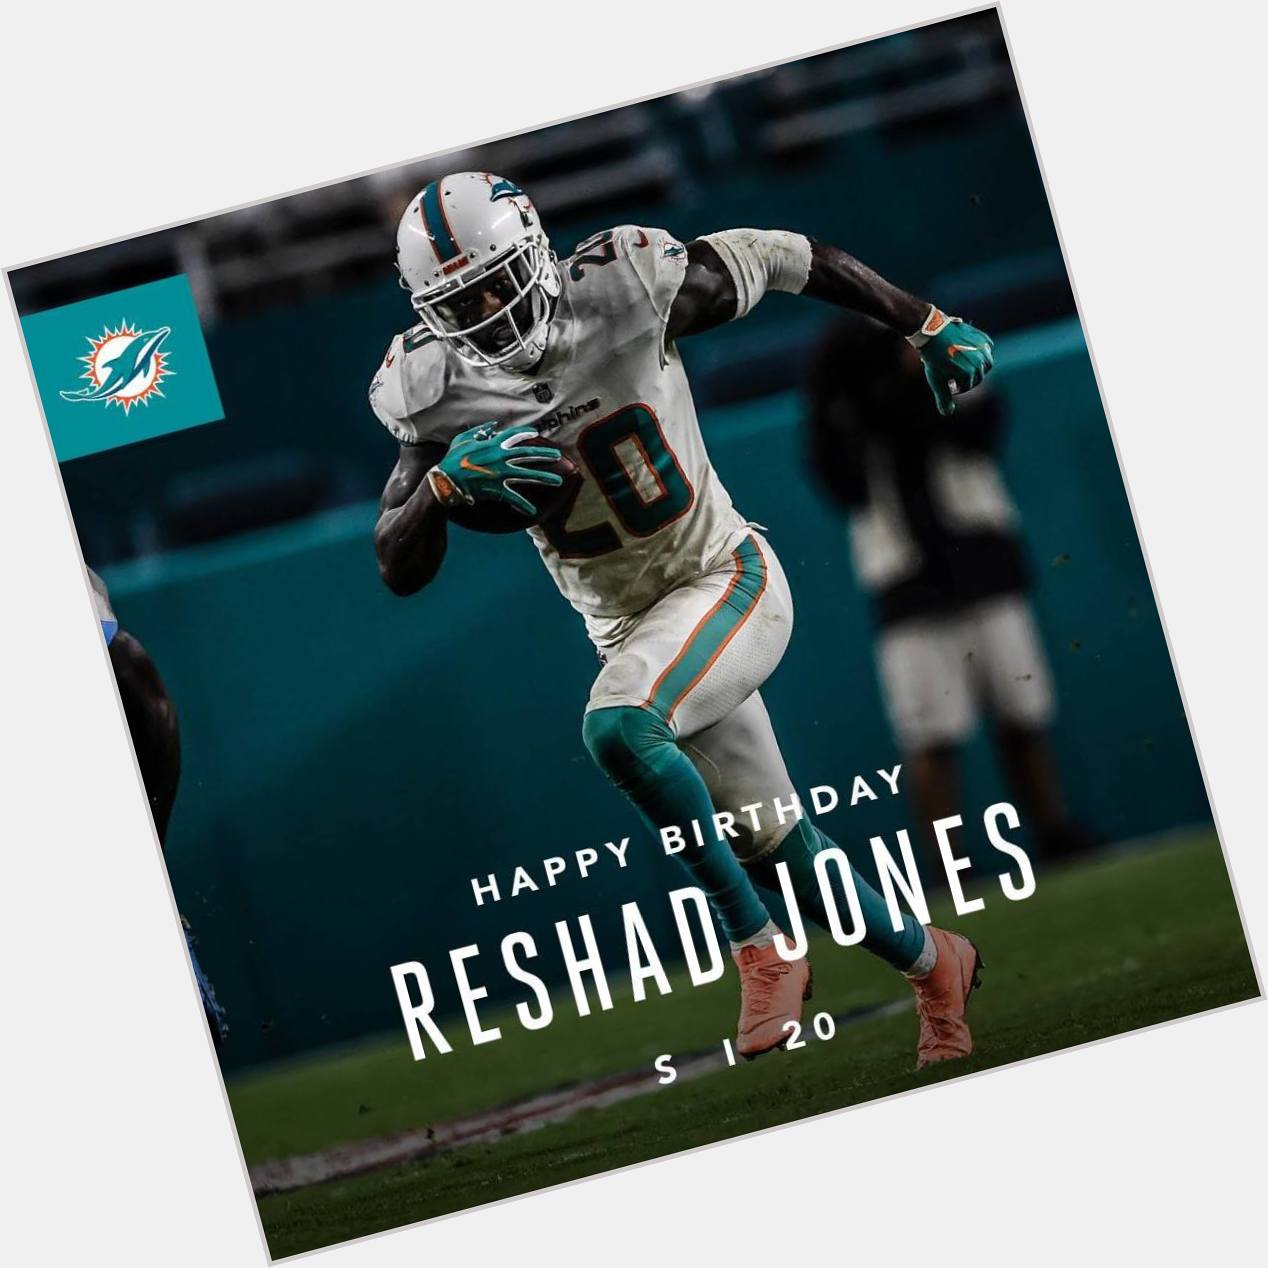 Wishing Reshad Jones a happy birthday!  